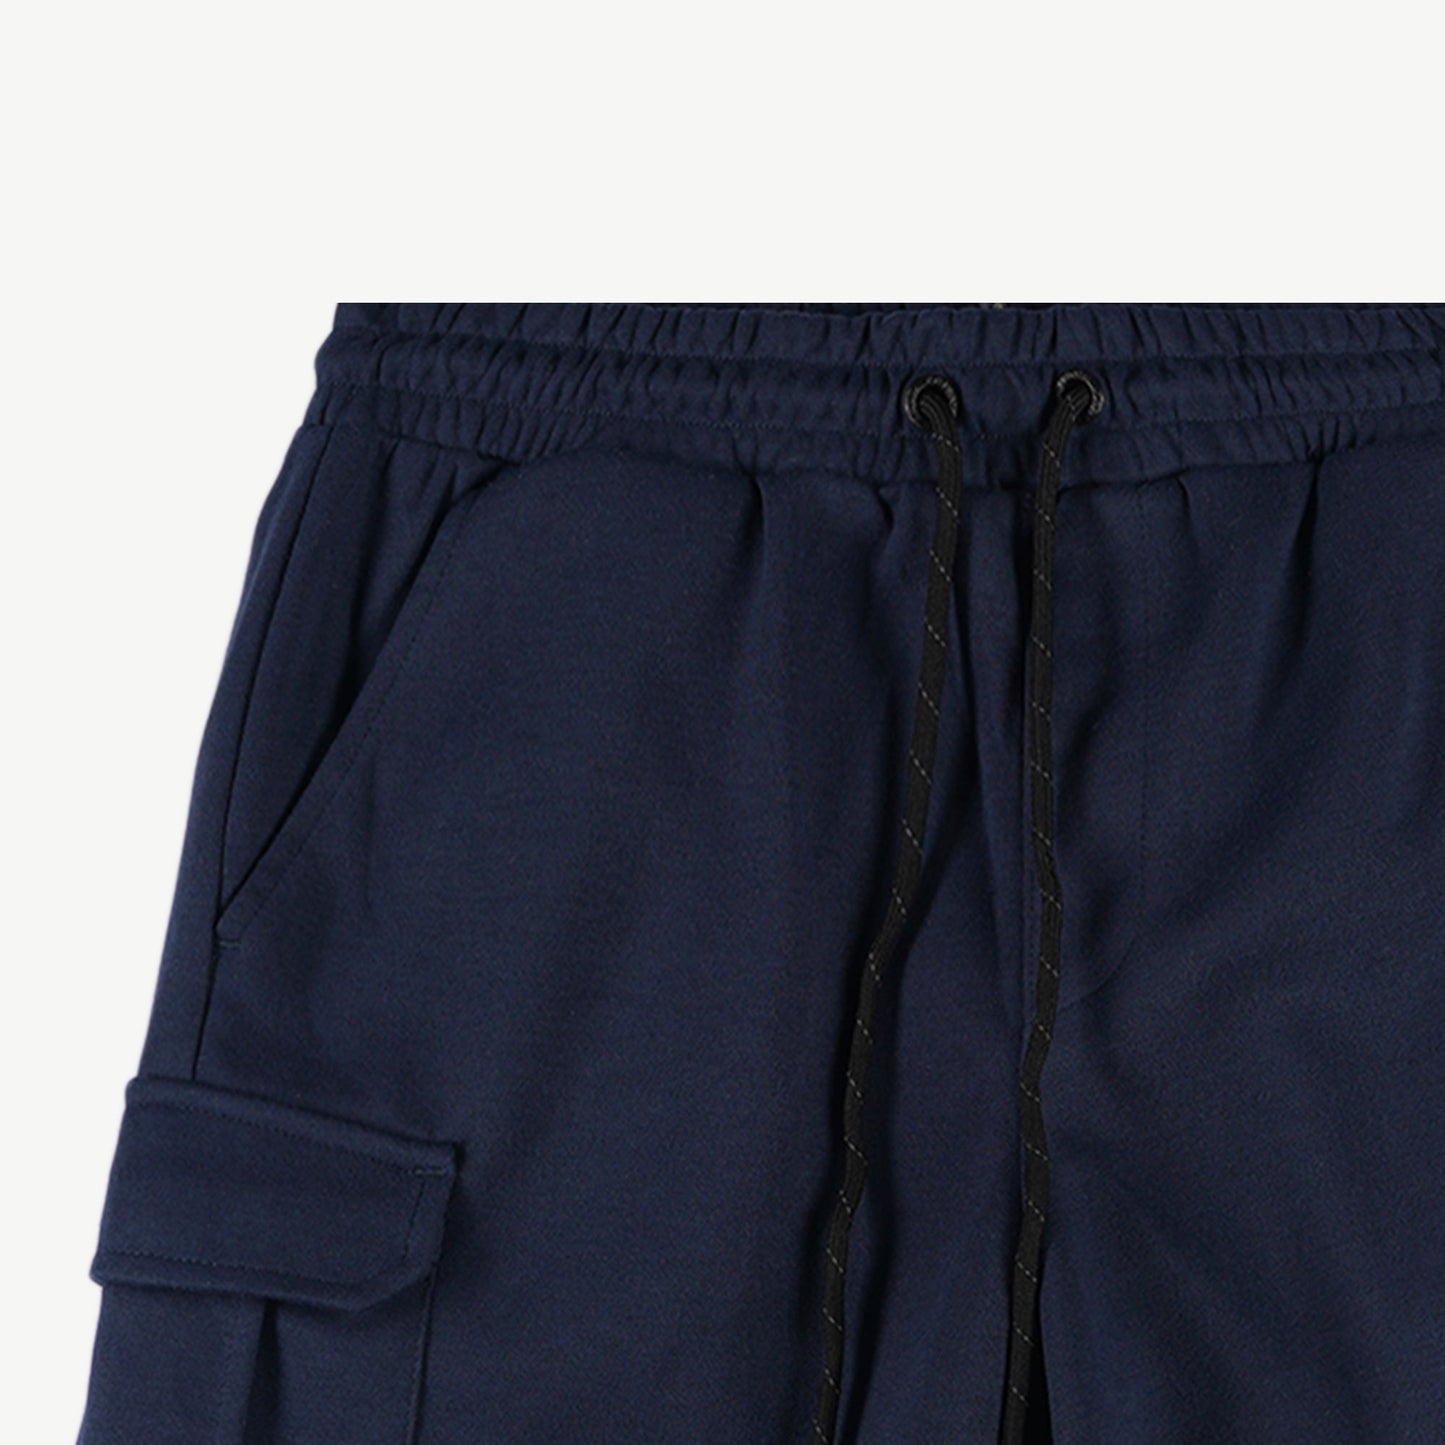 Petrol Basic Non-Denim Jogger Shorts for Men Trendy Fashion With Pocket Regular Fitting Garment Wash Fabric Casual short Navy Jogger short for Men 120001 (Navy)